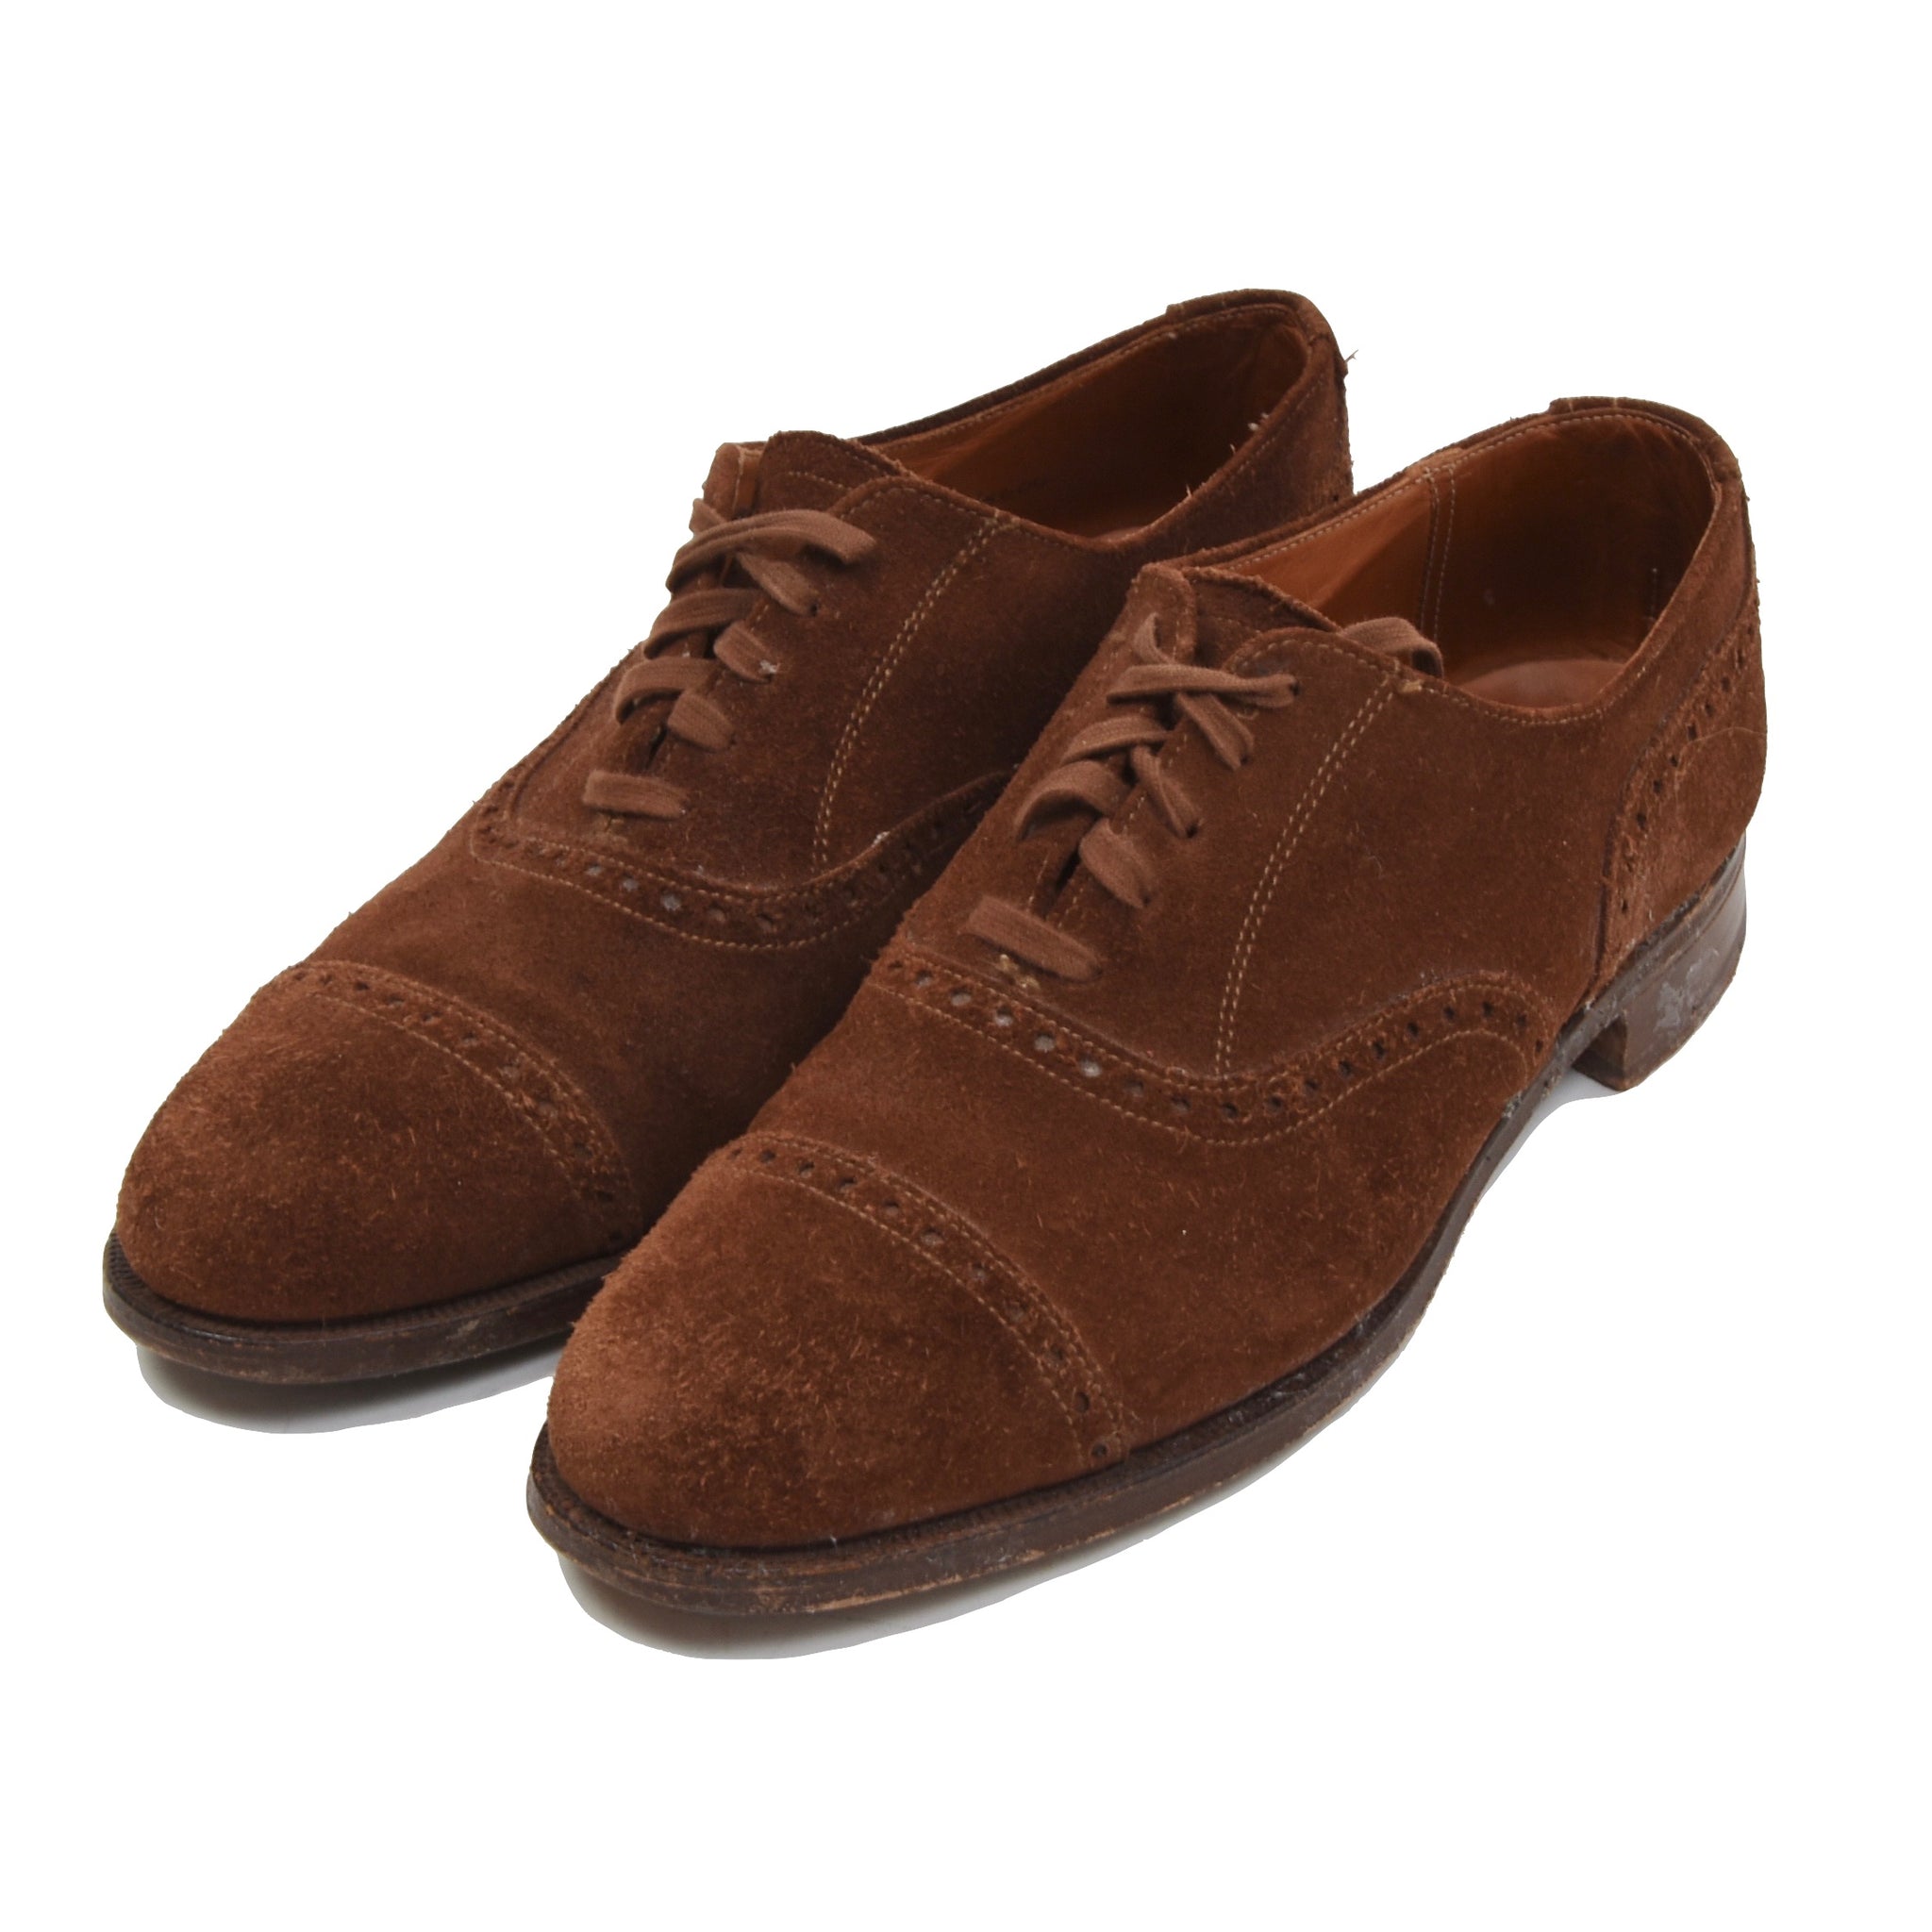 Polo Ralph Lauren x Crockett & Jones Suede Shoes Size 7D - Brown